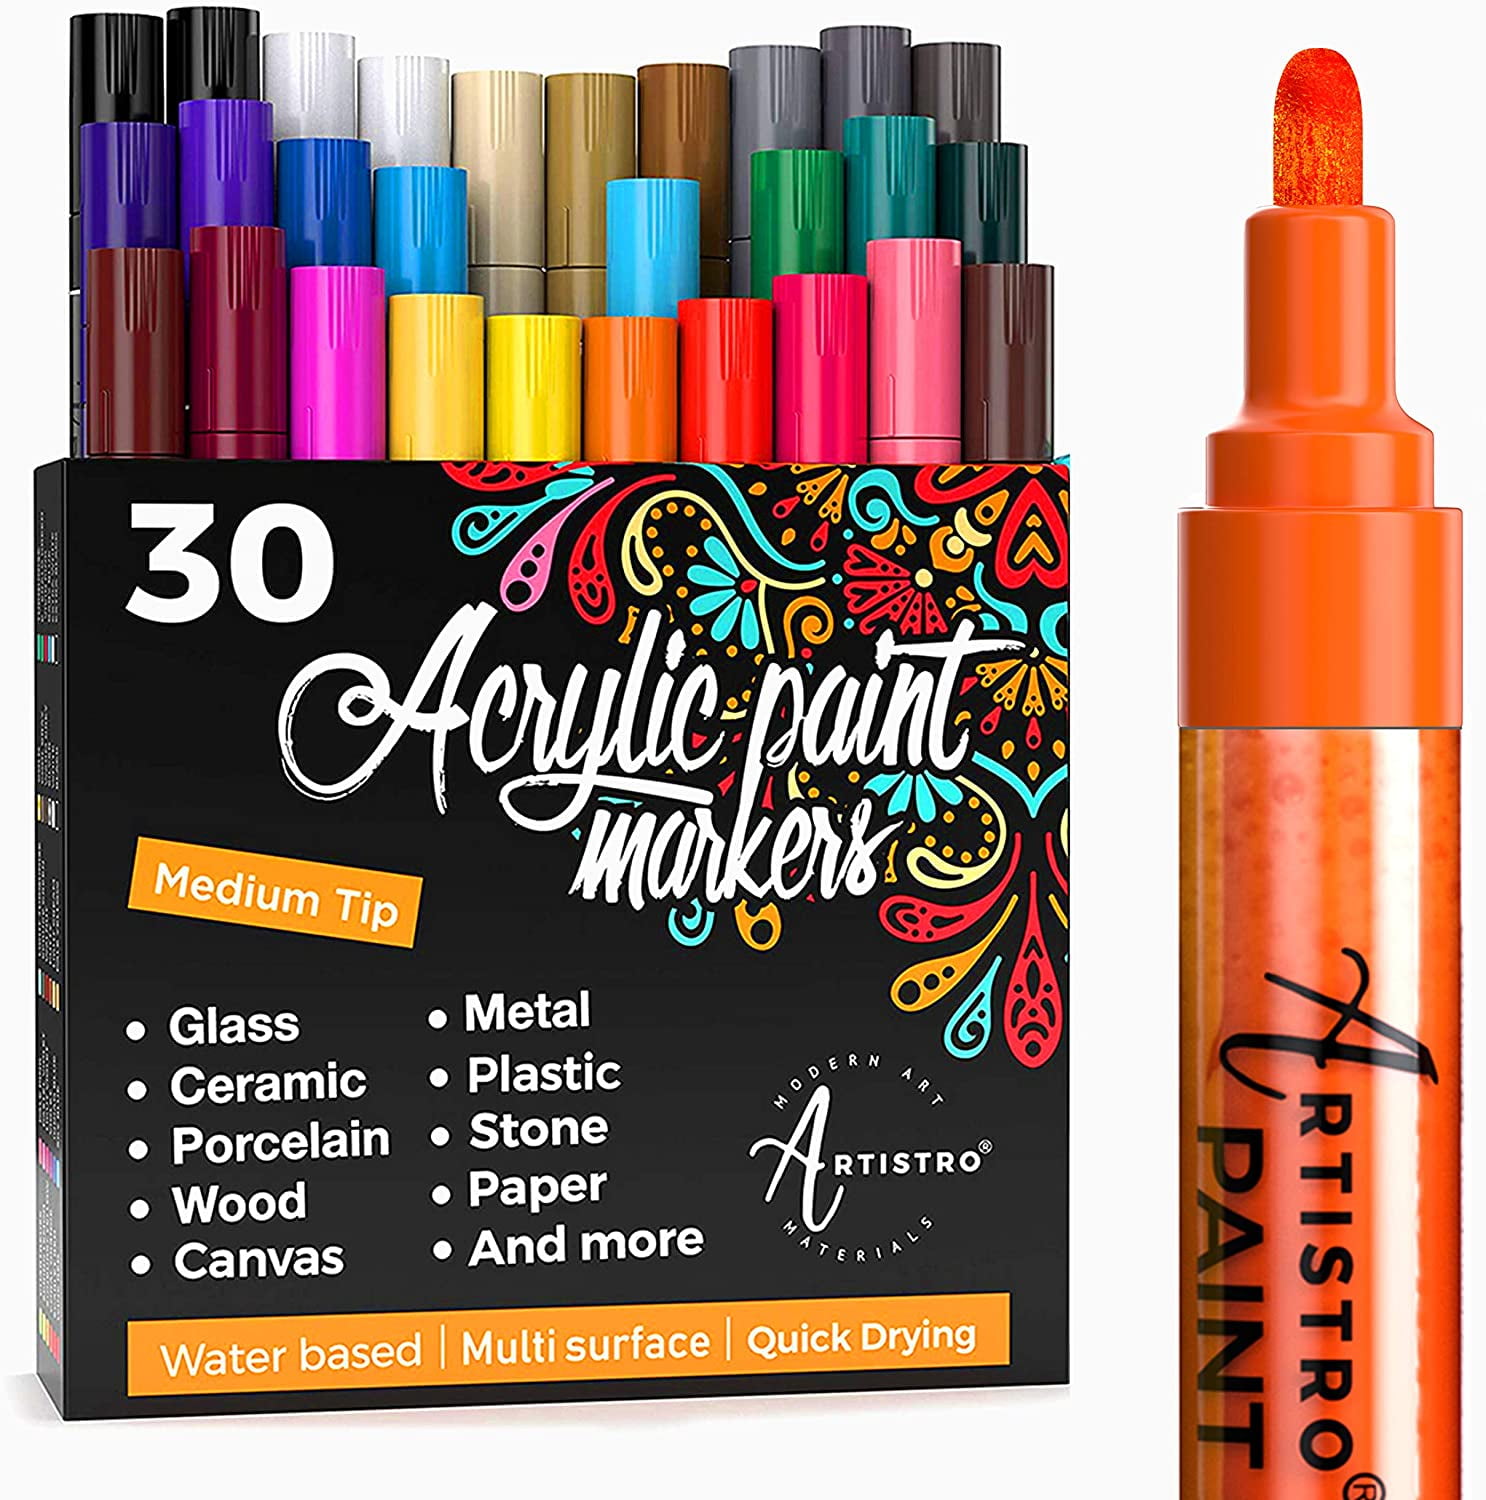 NEW FORMULA!) 30 Essential Acrylic Paint Pens Assorted Color Set (0.7 –  TOOLI-ART